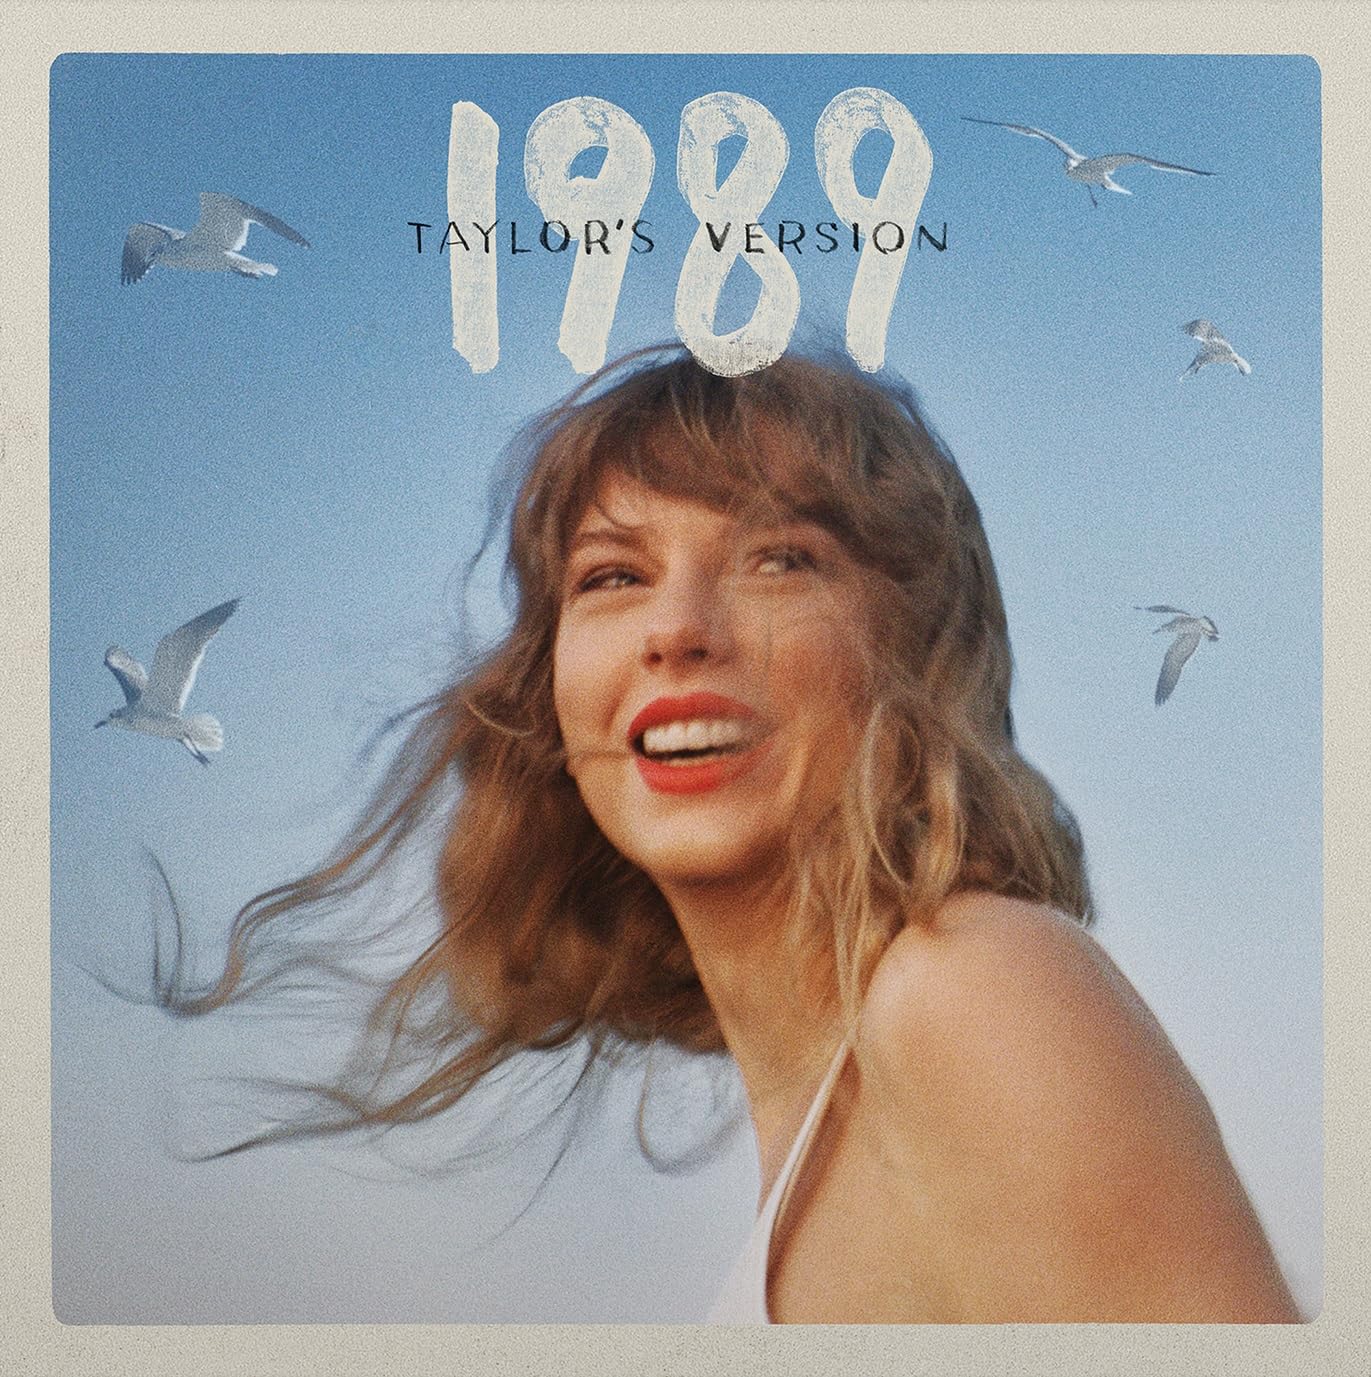 1989 (Taylor’s Version) on MovieShack